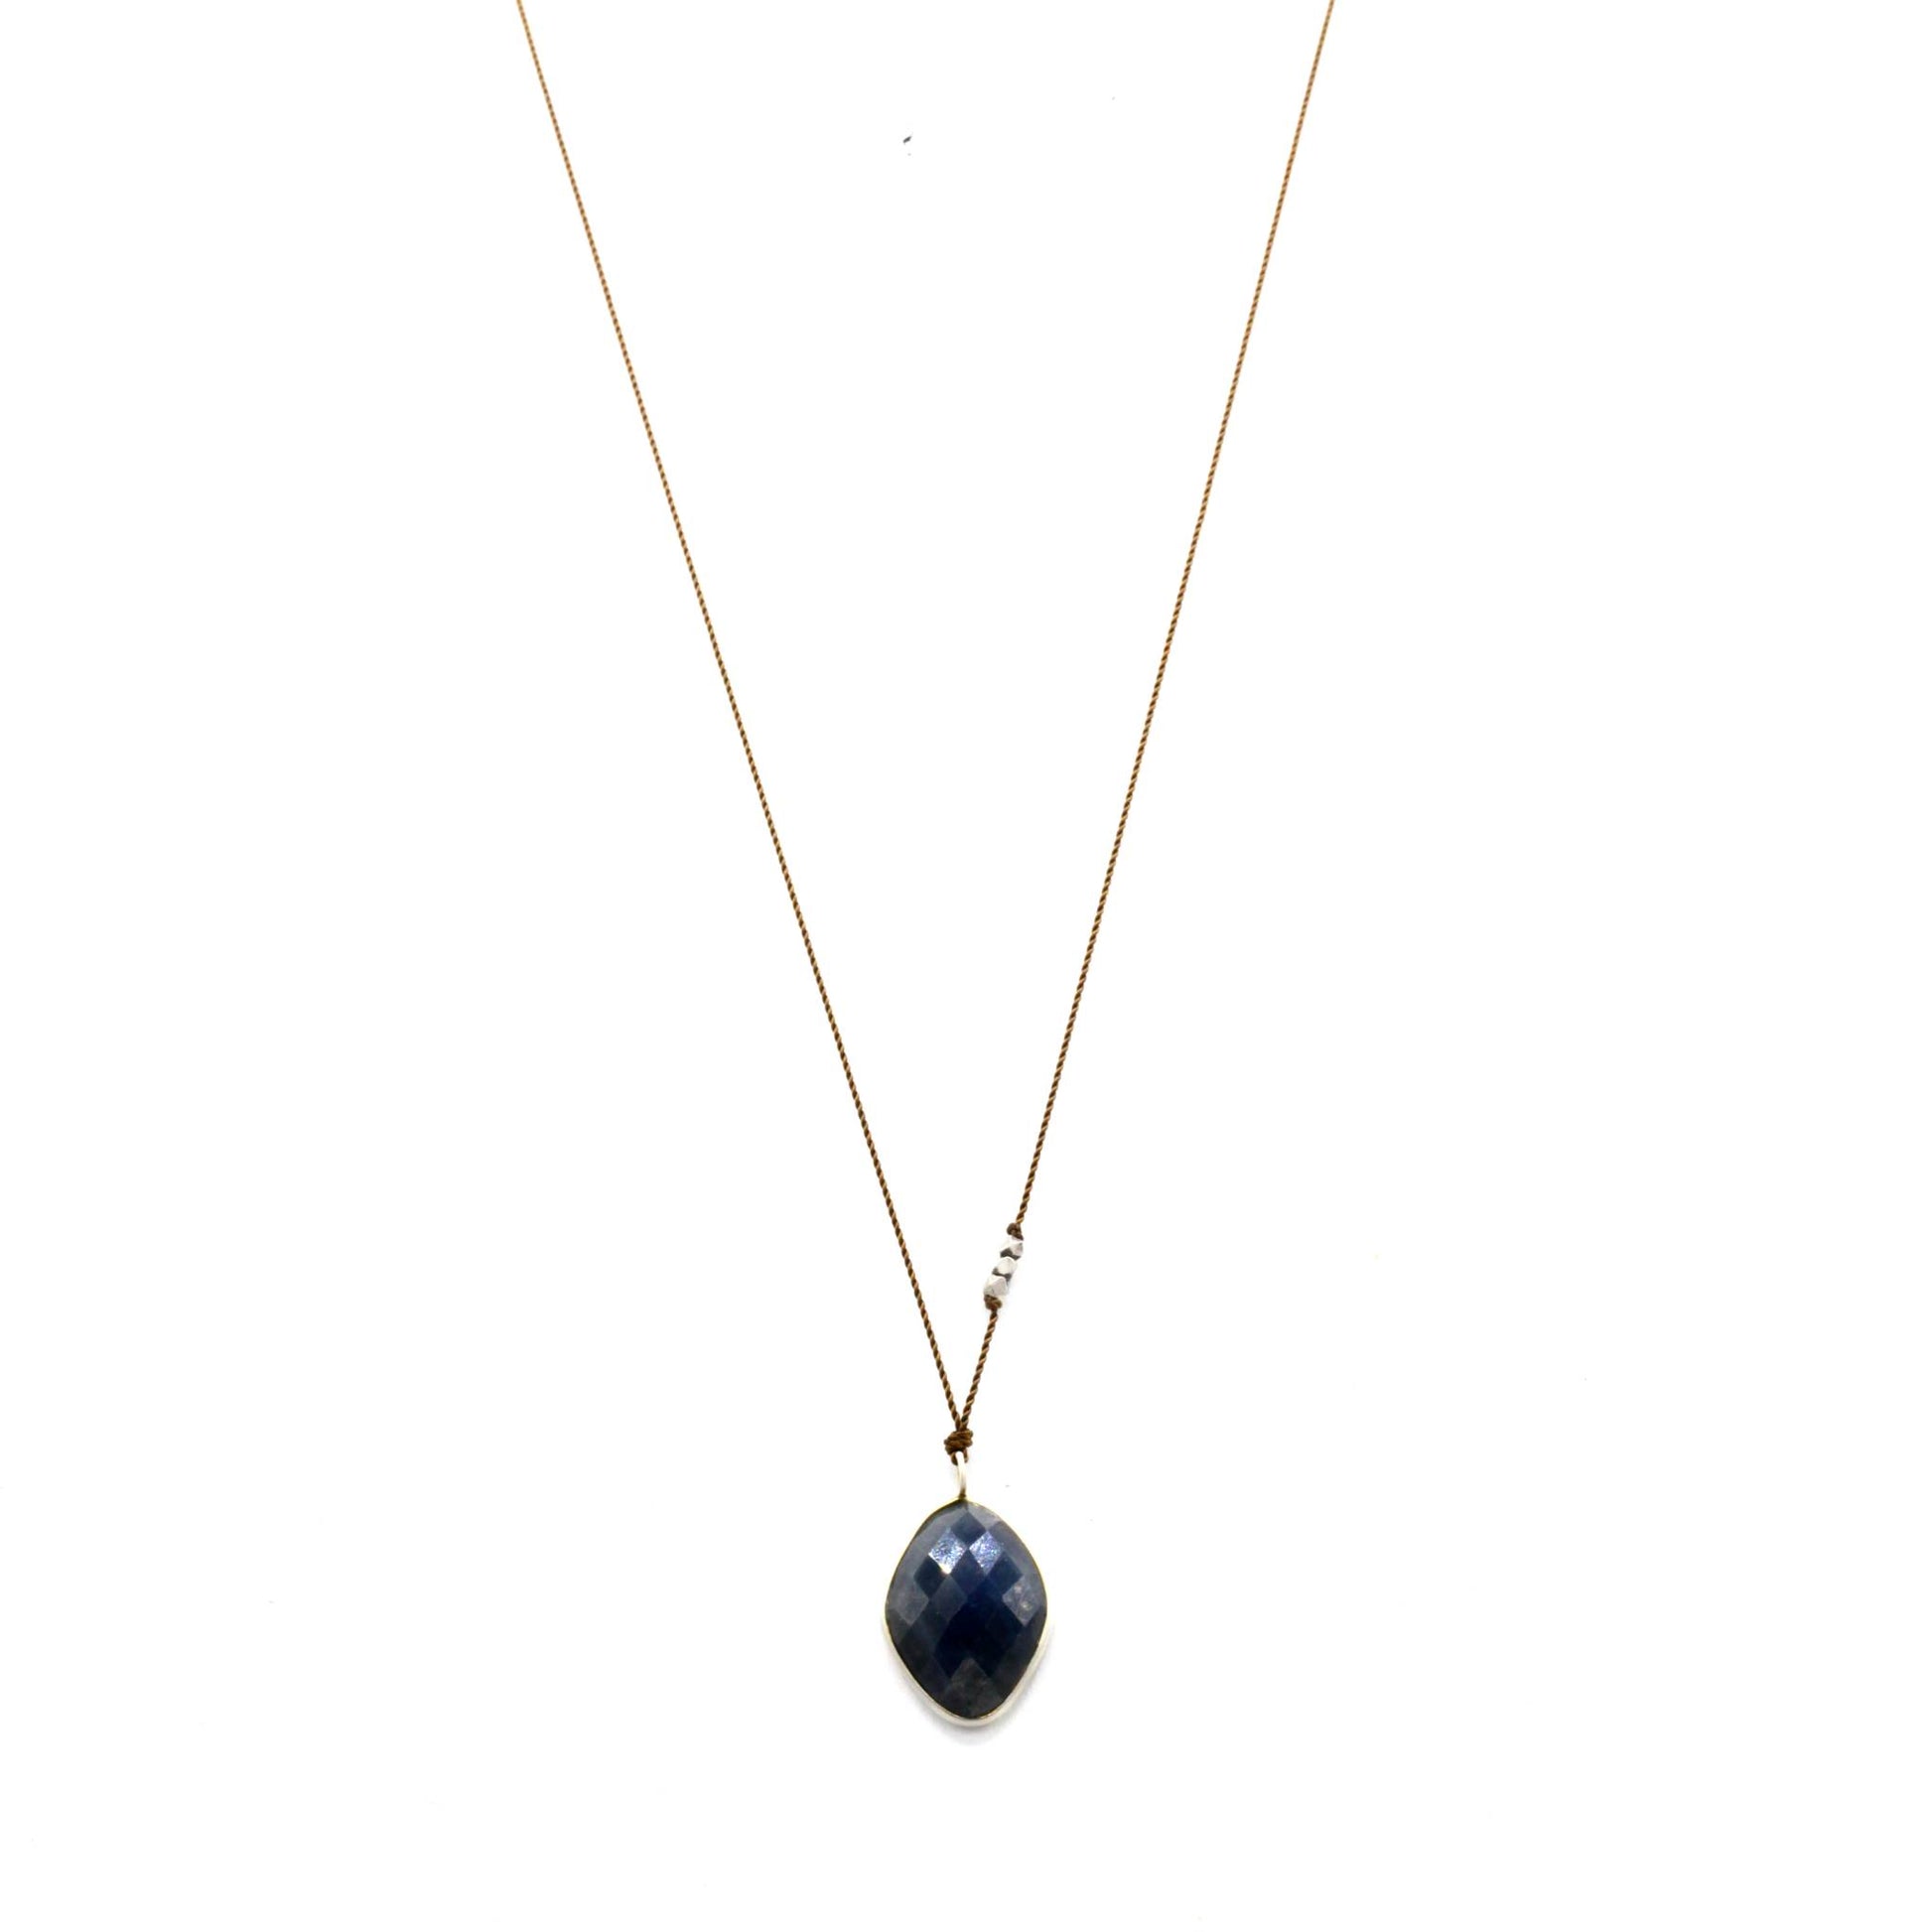 Margaret Solow Jewelry | Blue Sapphire + Sterling Silver Drop Necklace | Firecracker